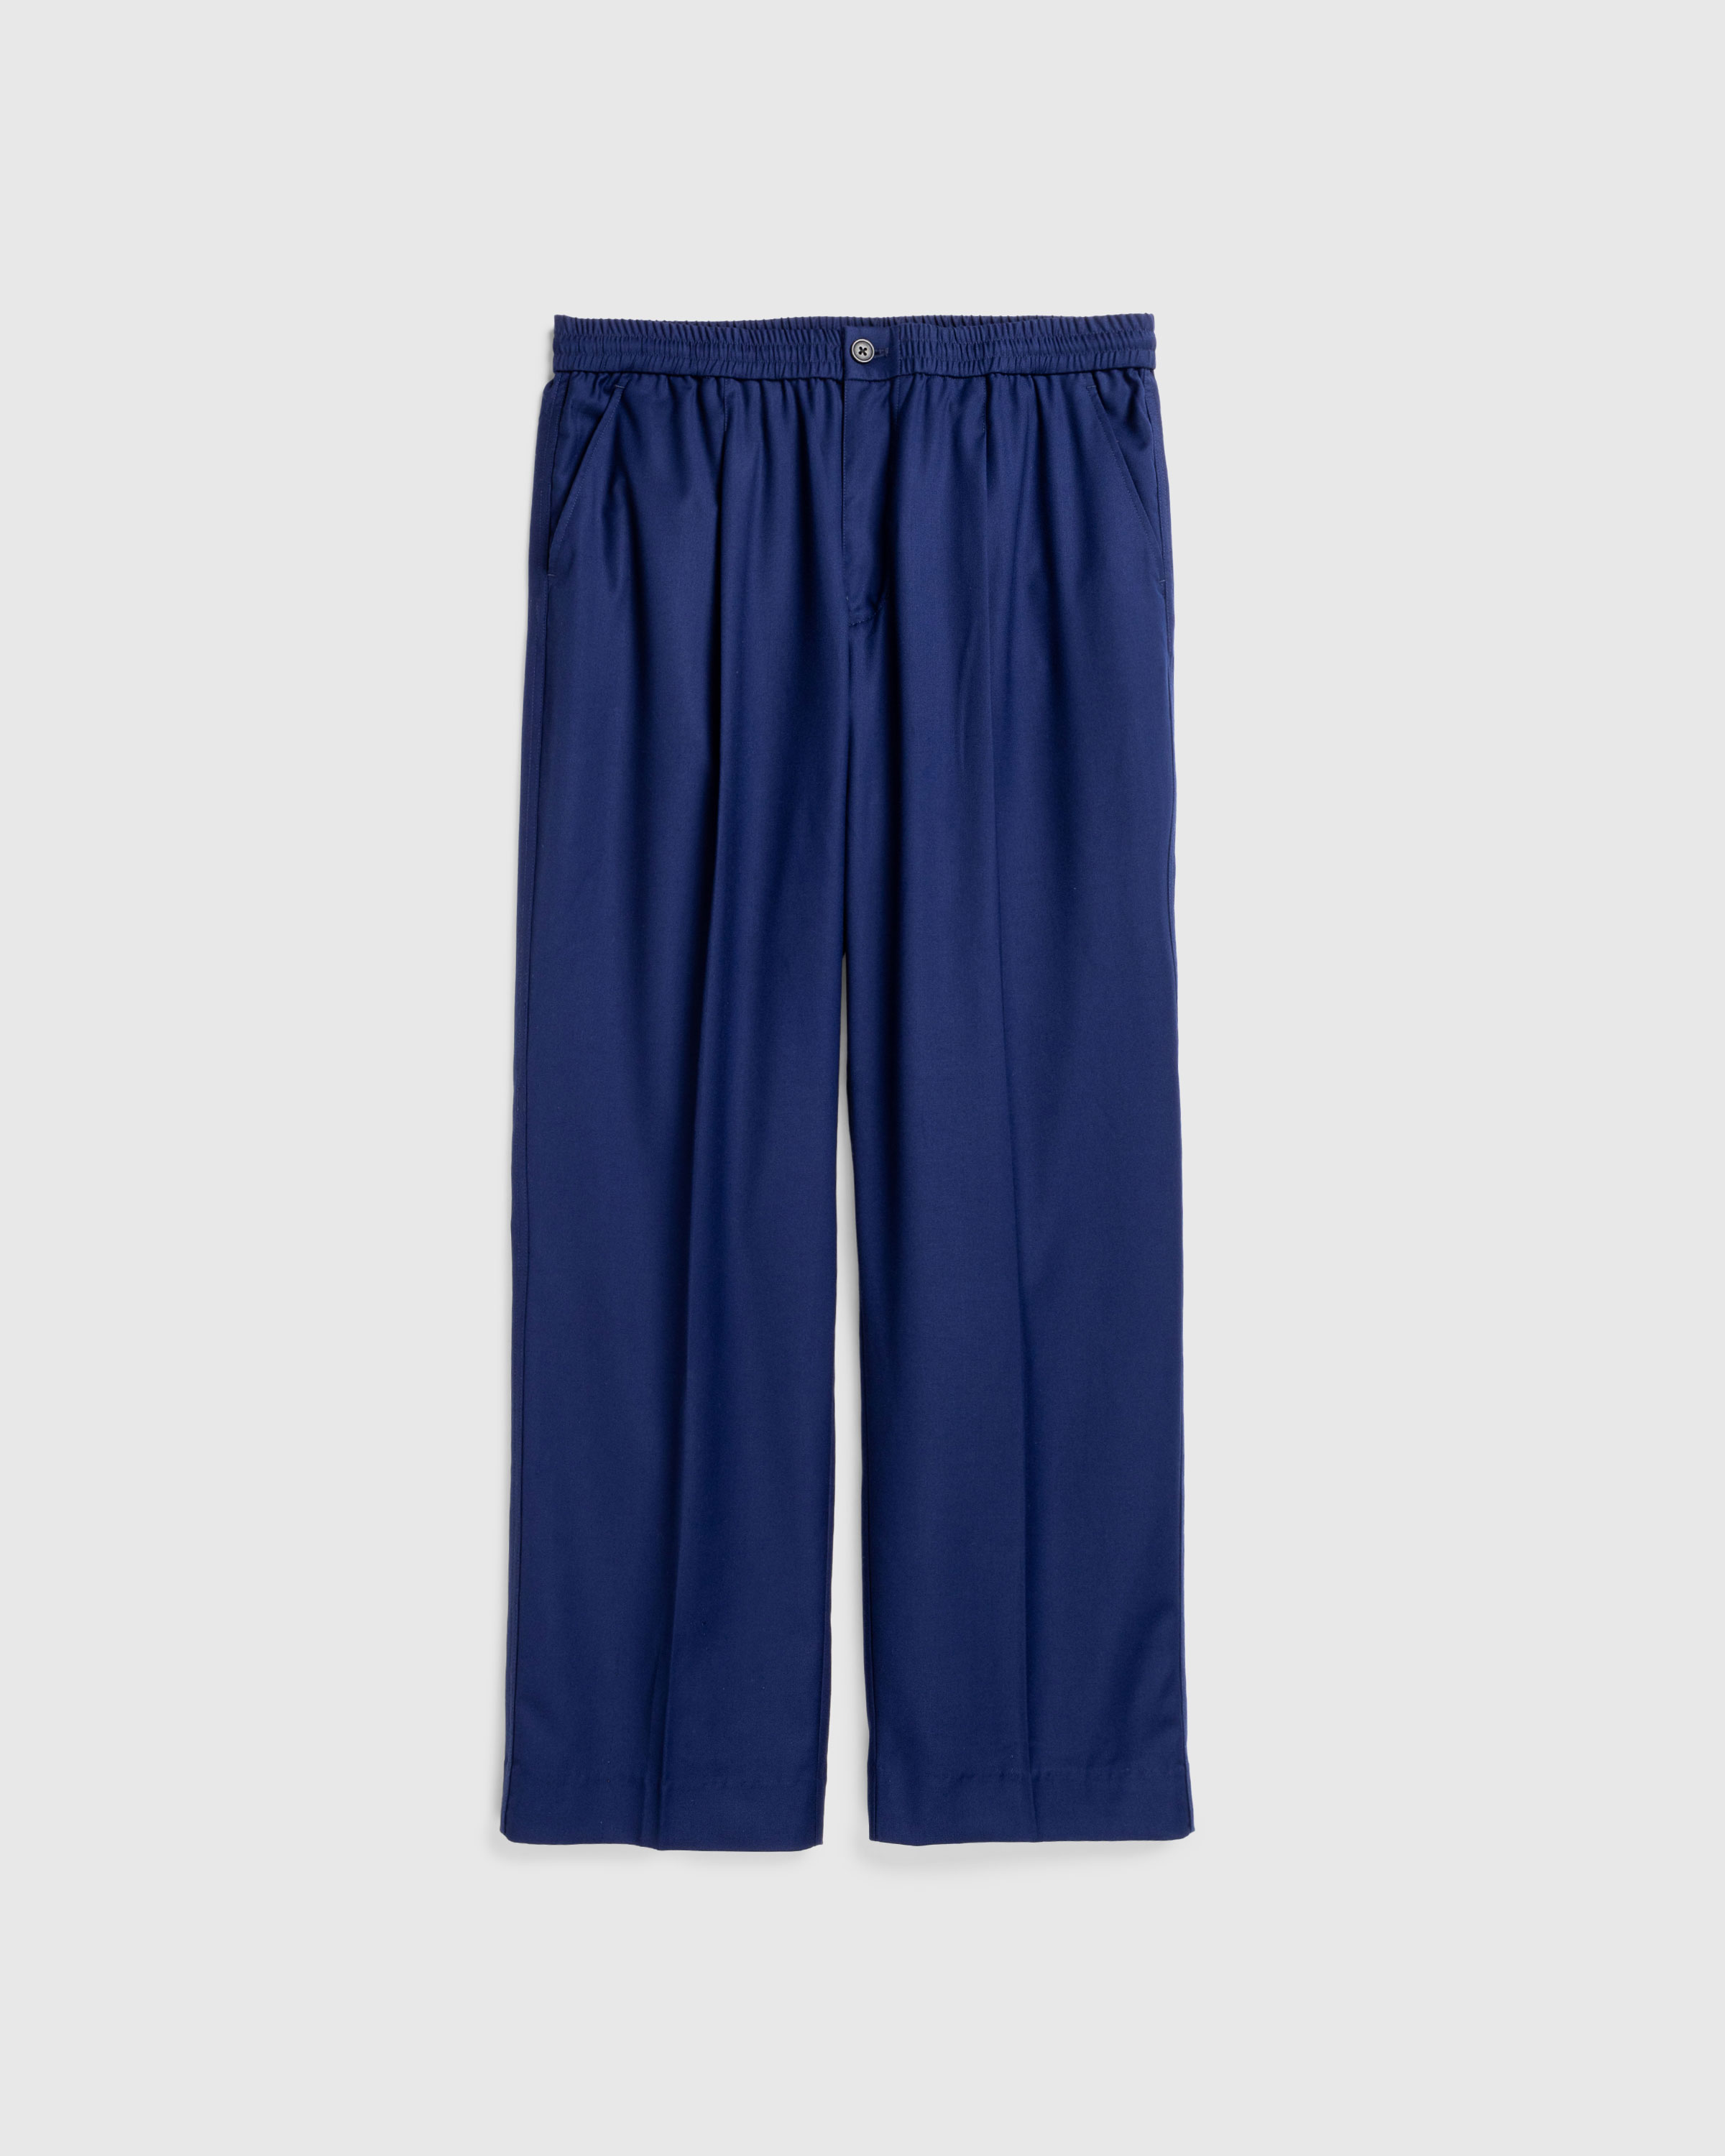 Awake NY – Wool Pant Navy - Pants - Blue - Image 1